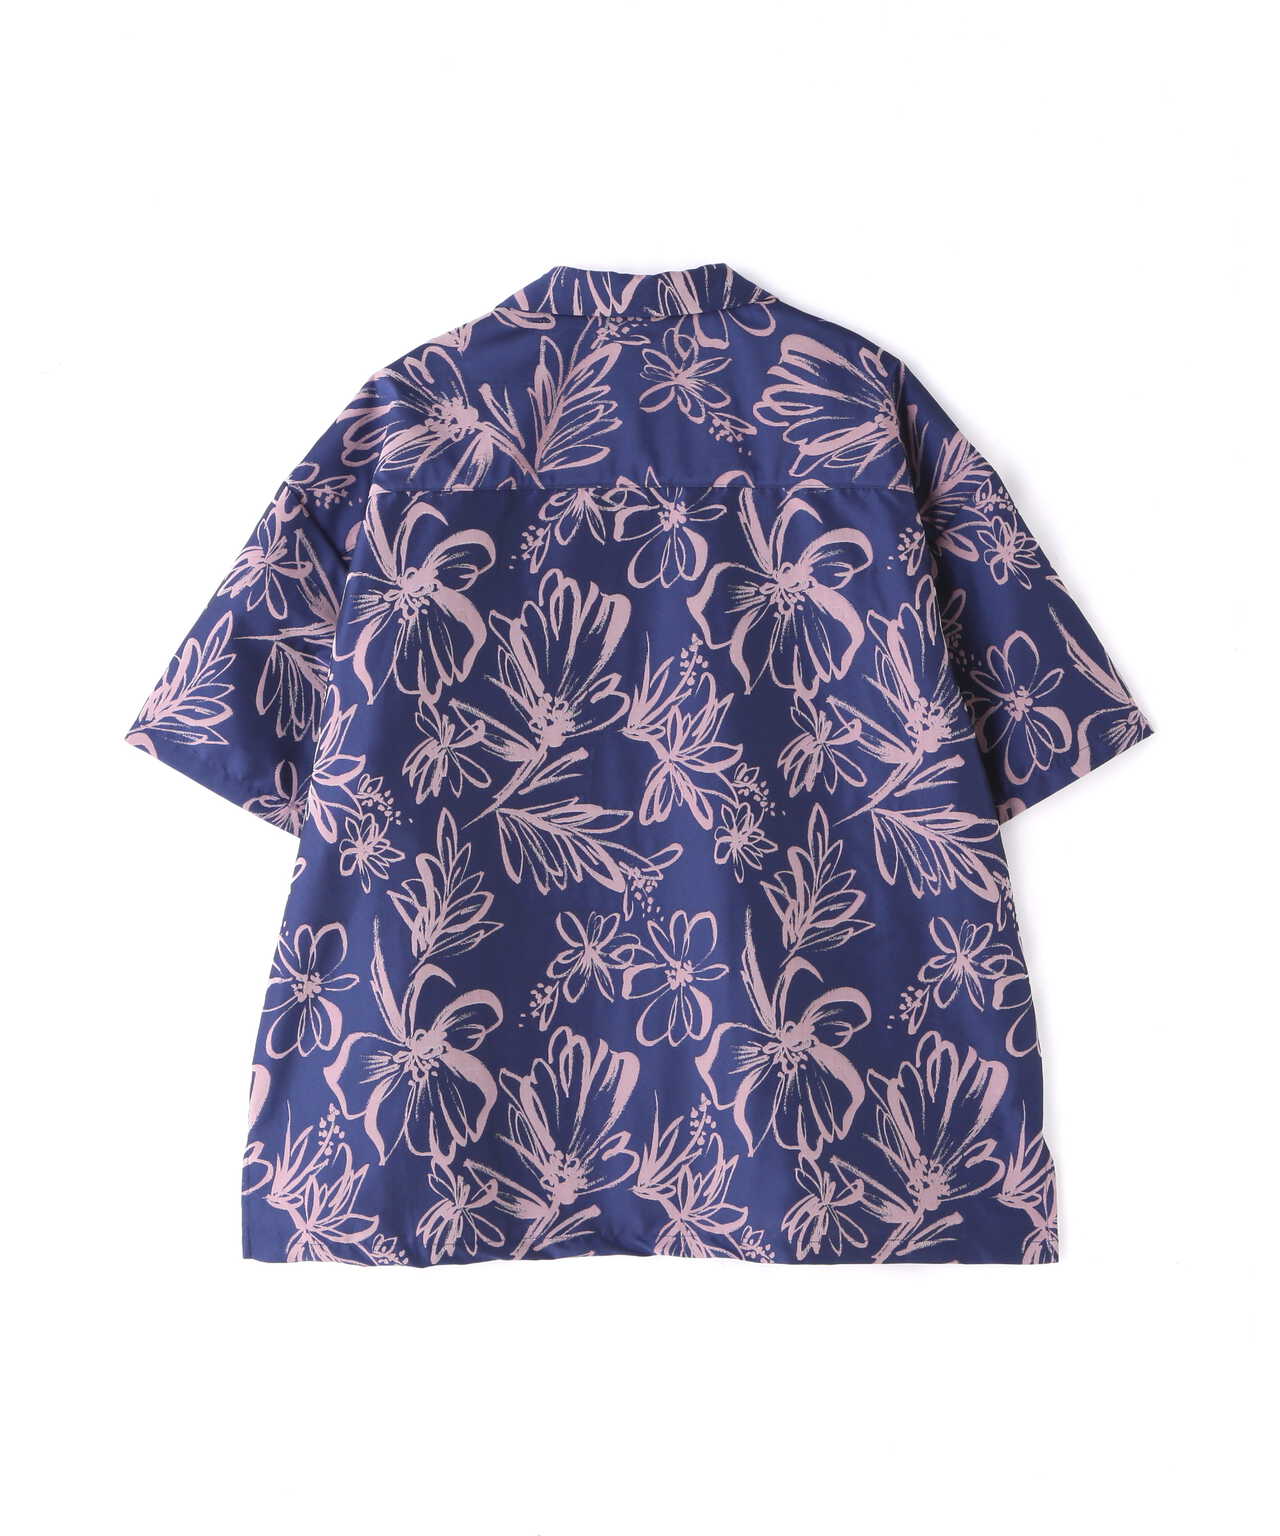 Dankeschon/ダンケシェーン/Flower Shirt/フラワーシャツ